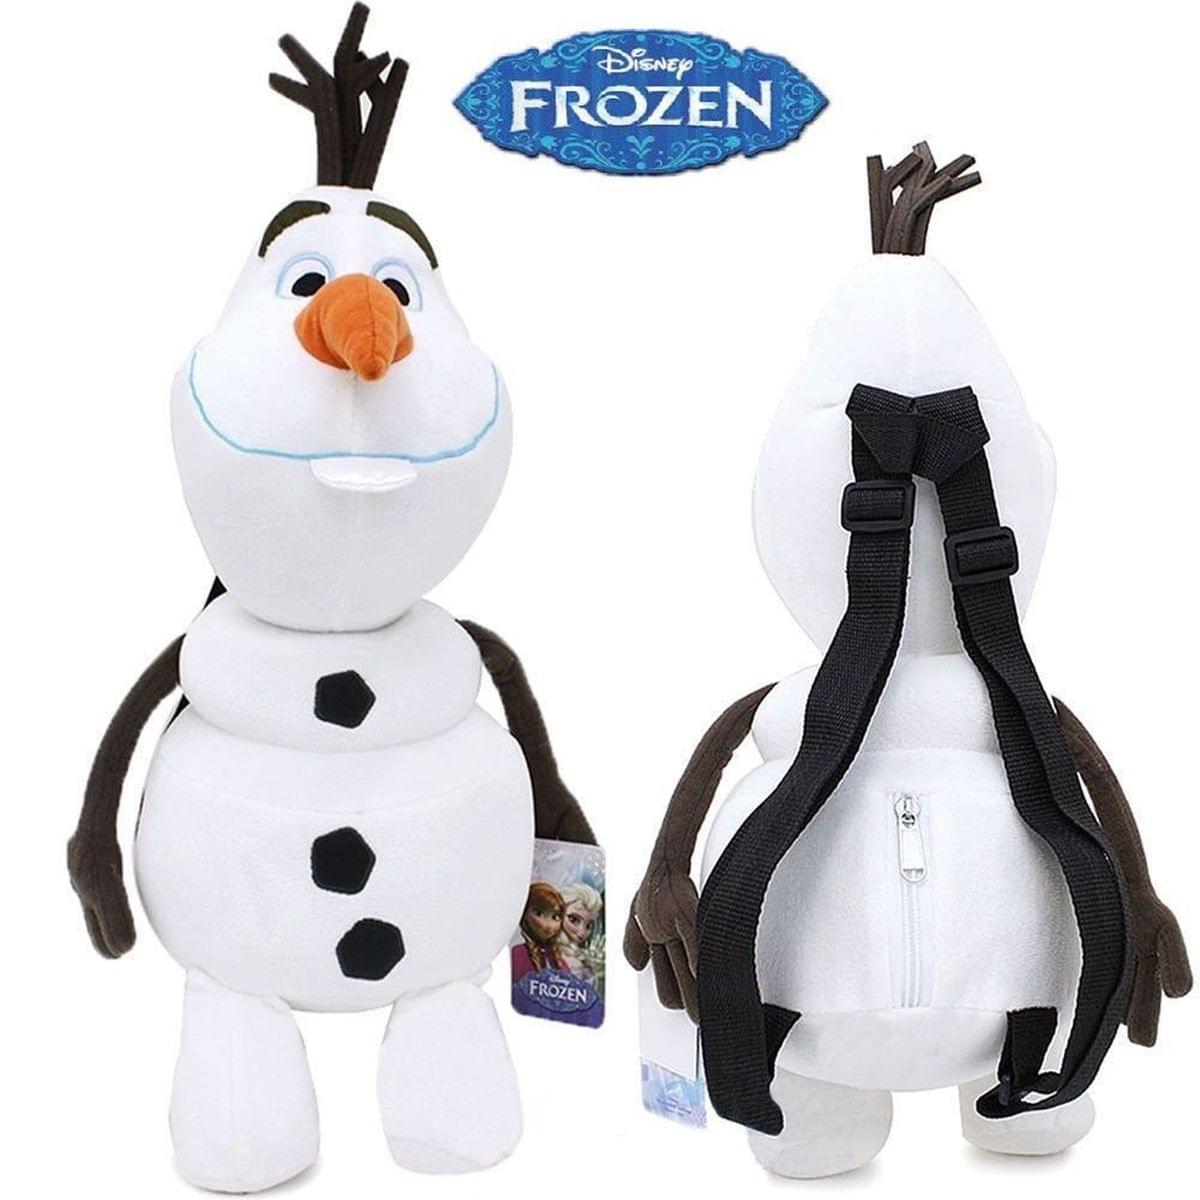 Frozen 17" Plush Backpack- Olaf